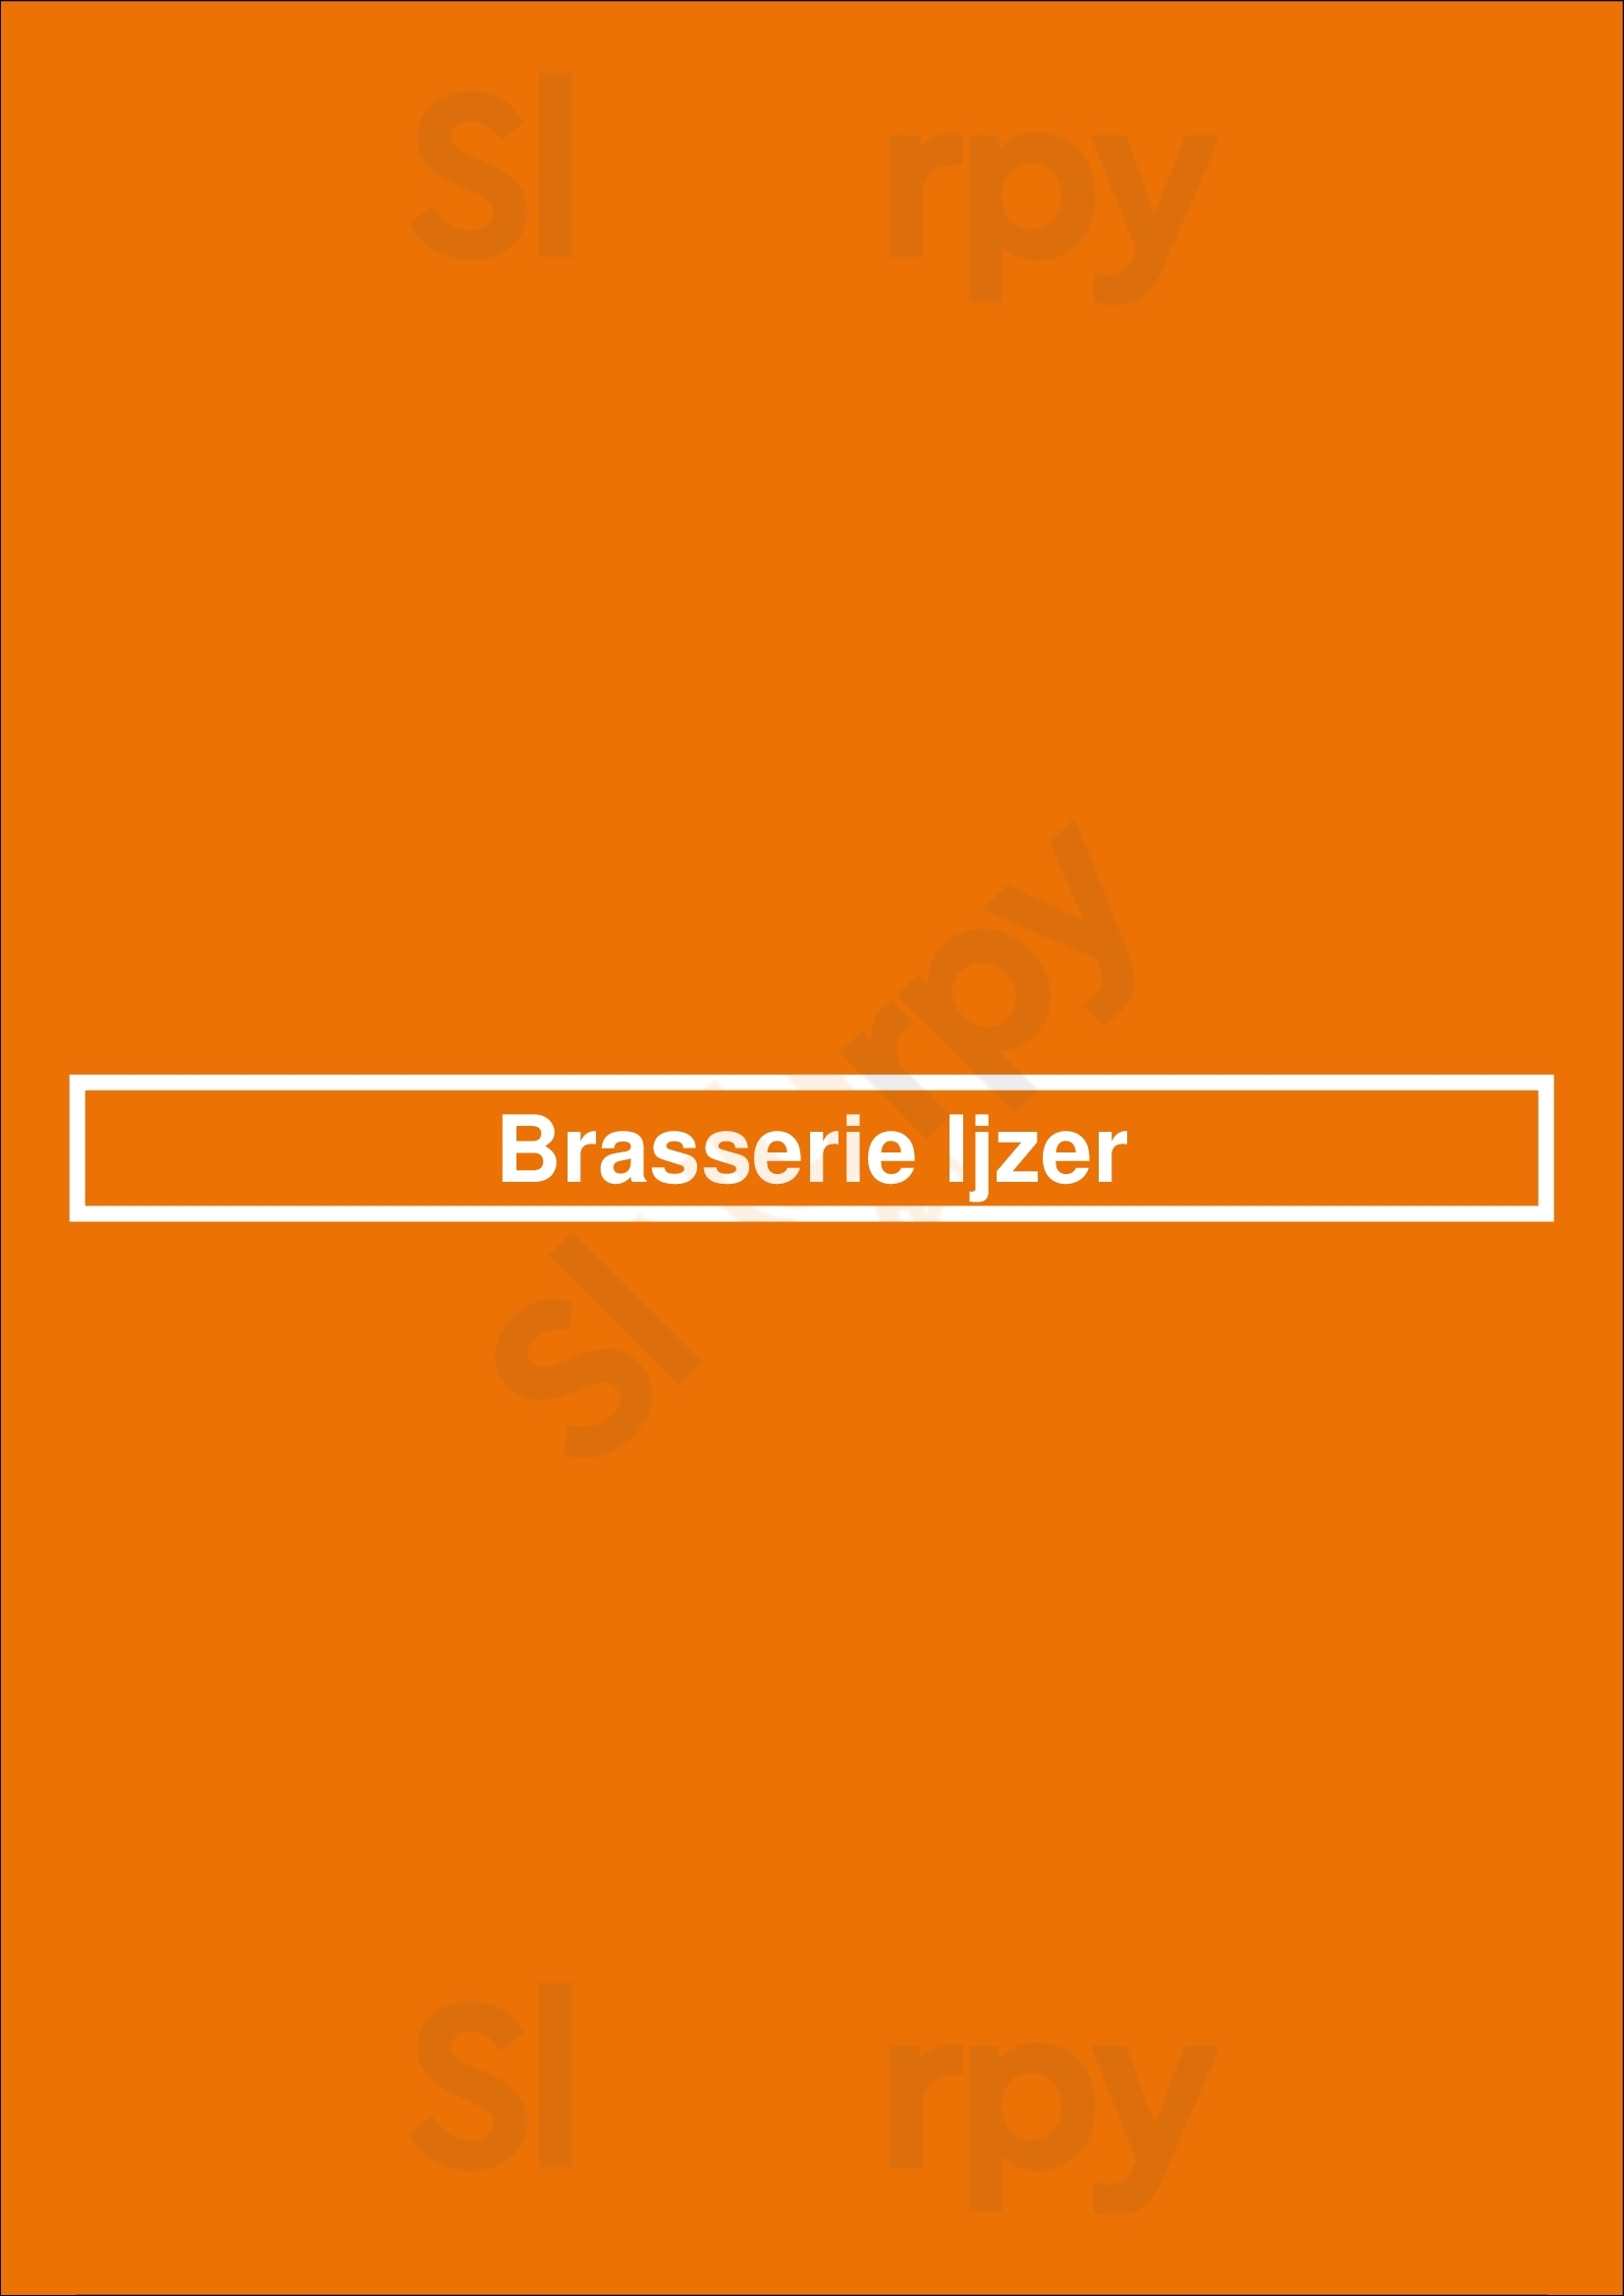 Brasserie Ijzer Heerhugowaard Menu - 1